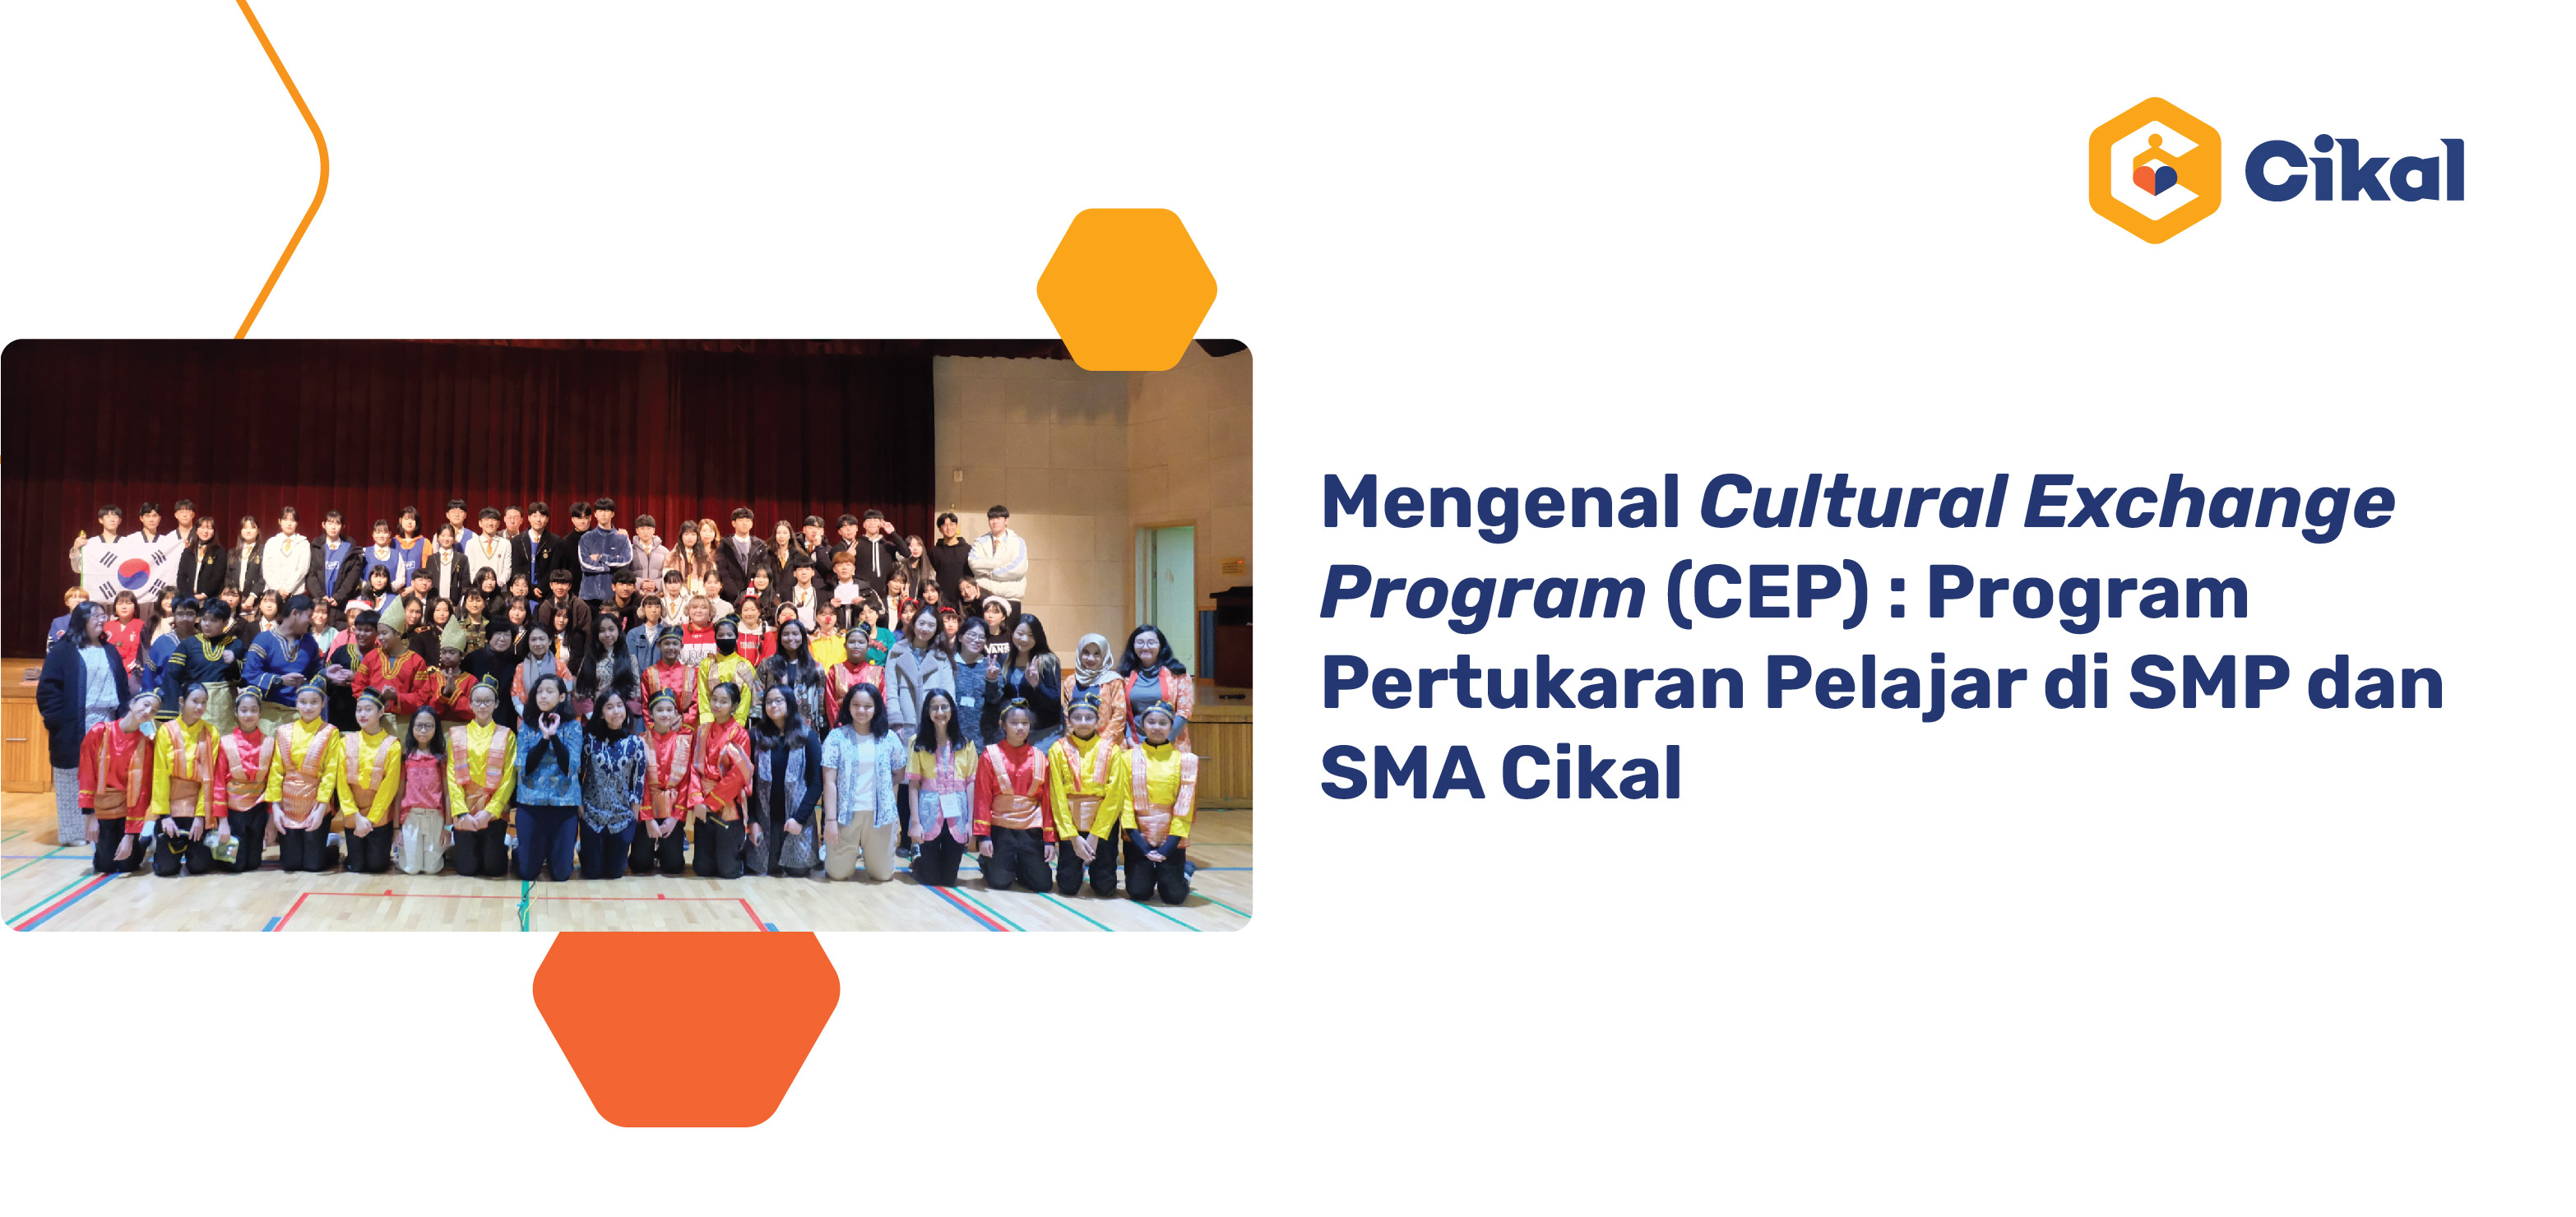 Mengenal Cultural Exchange Program (CEP)  Program Pertukaran Pelajar di SMP dan SMA Cikal 